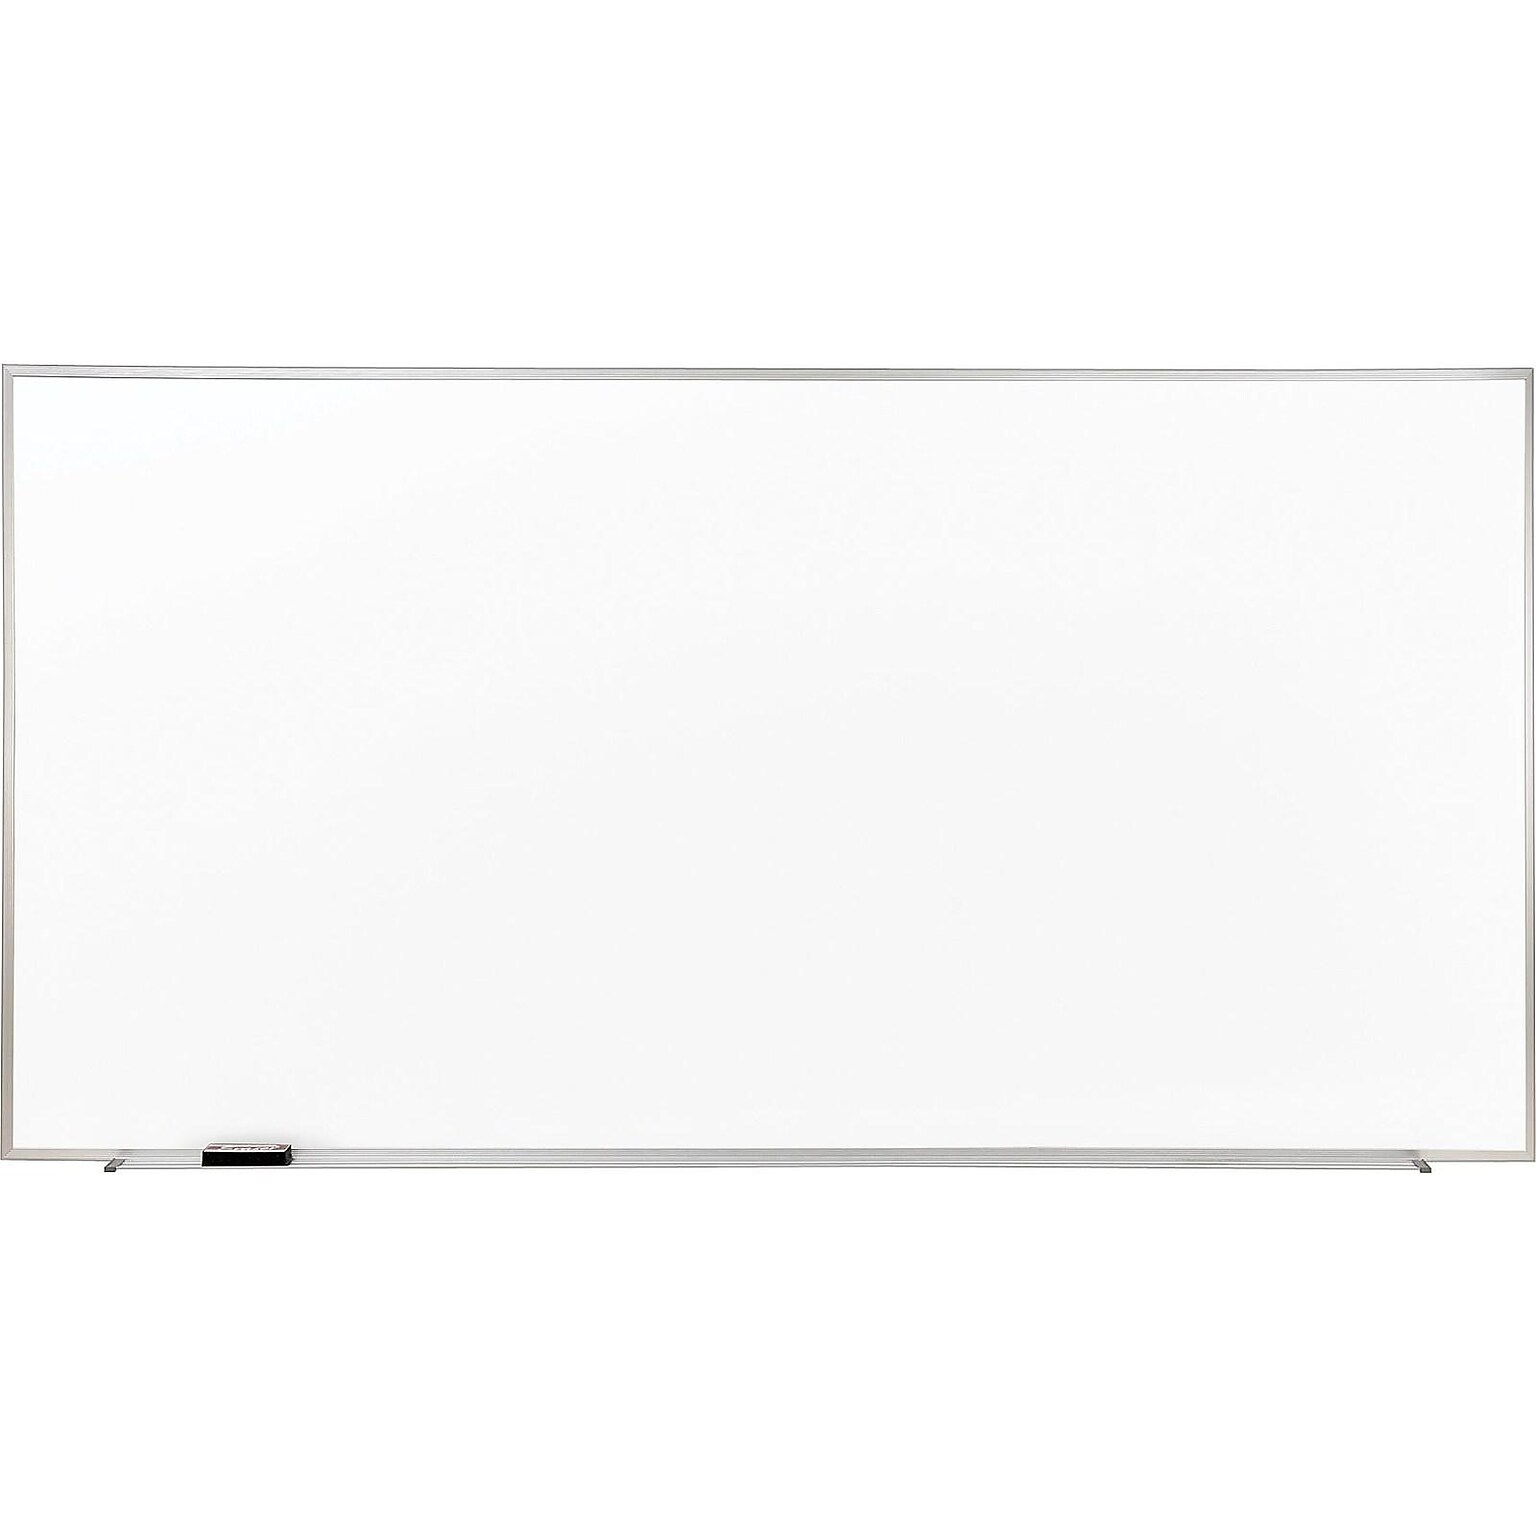 Ghent M2 Series Laminate Dry-Erase Whiteboard, Aluminum Frame, 8 x 4 (M2-48-4)